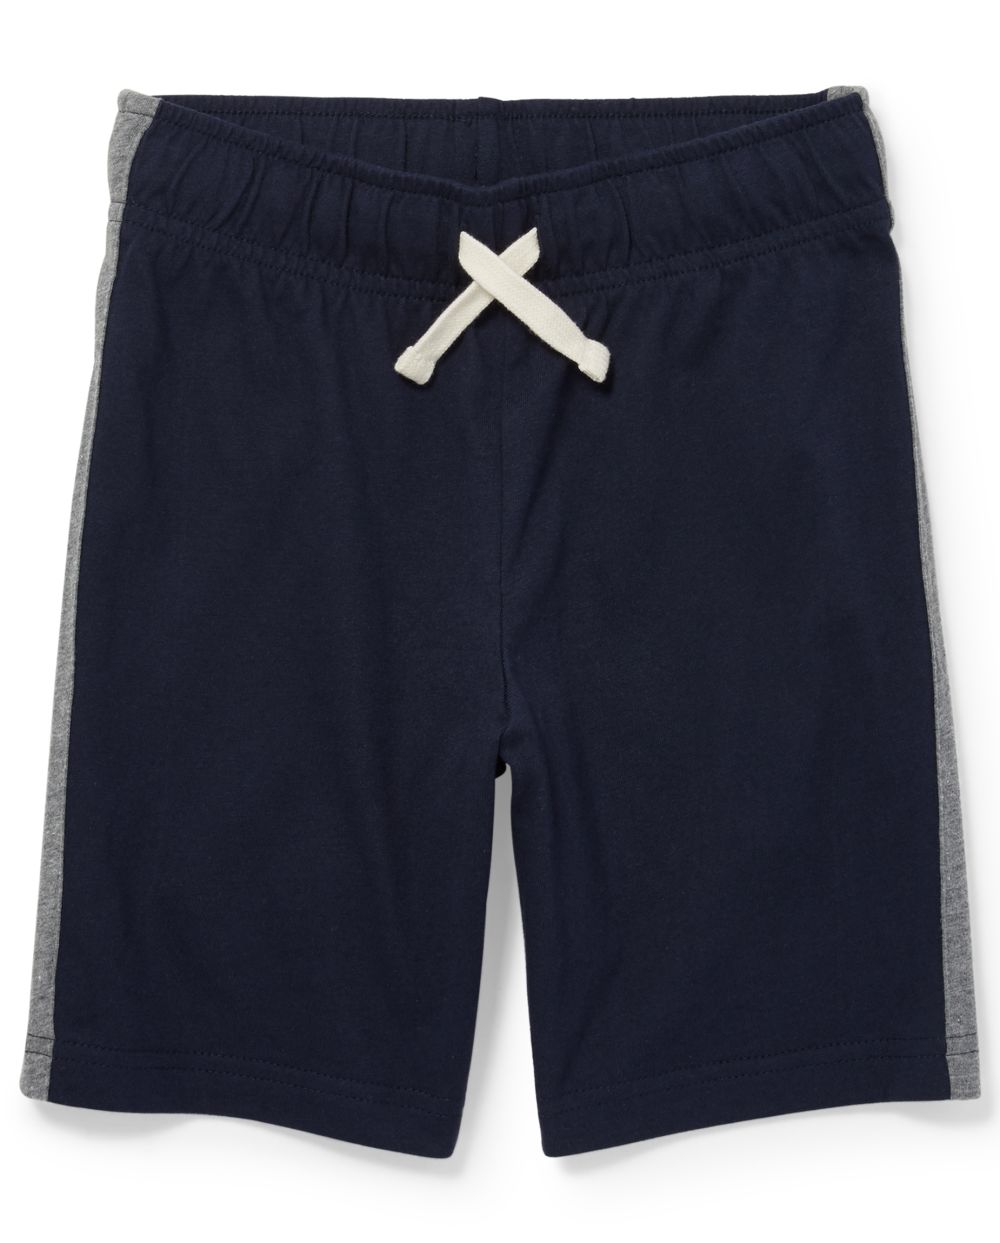 Boys Mix And Match Jersey Knit Shorts